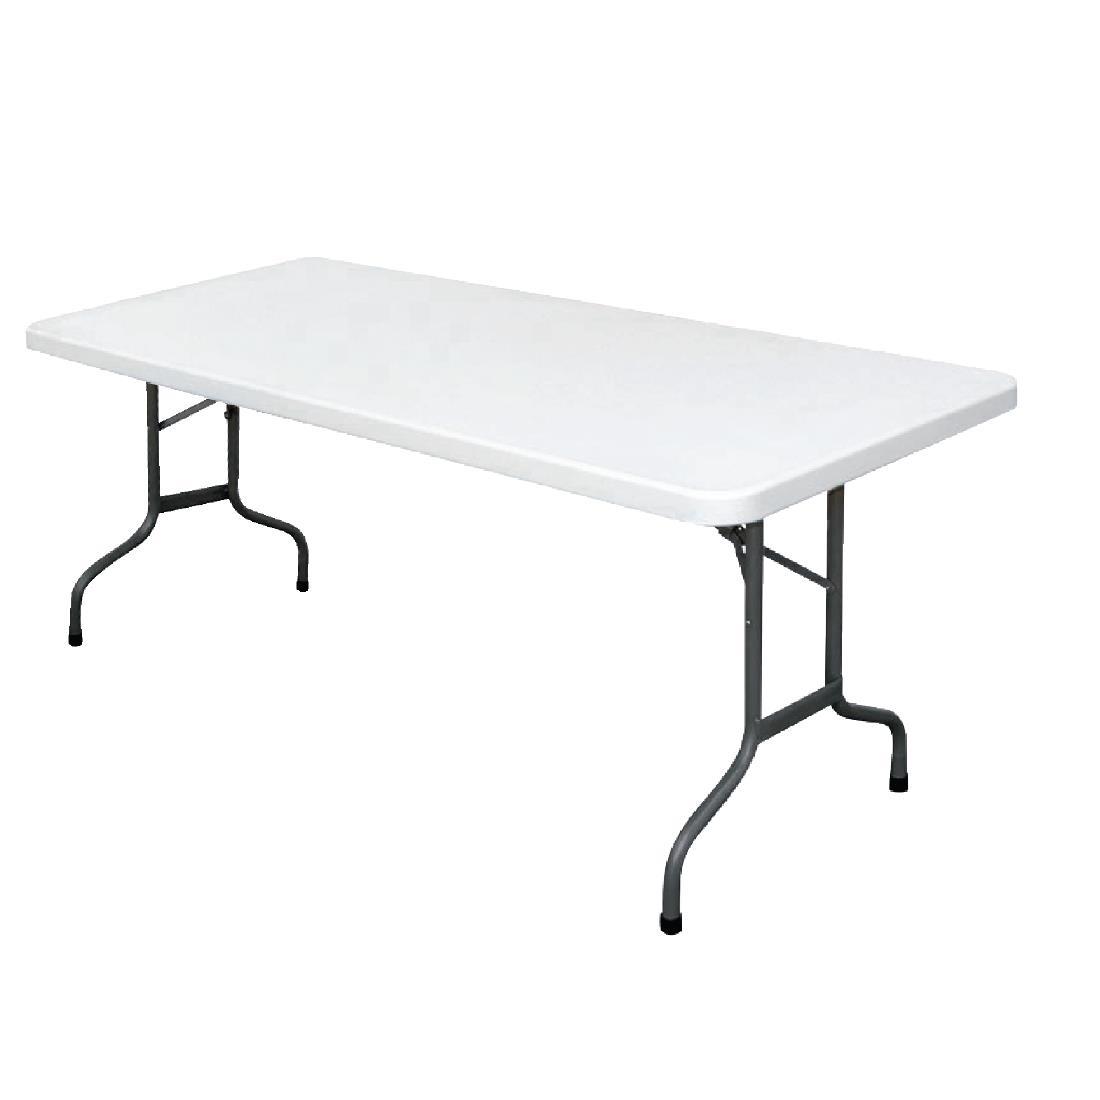 Bolero PE Rectangular Folding Table White 6ft (Single) - U579  - 1